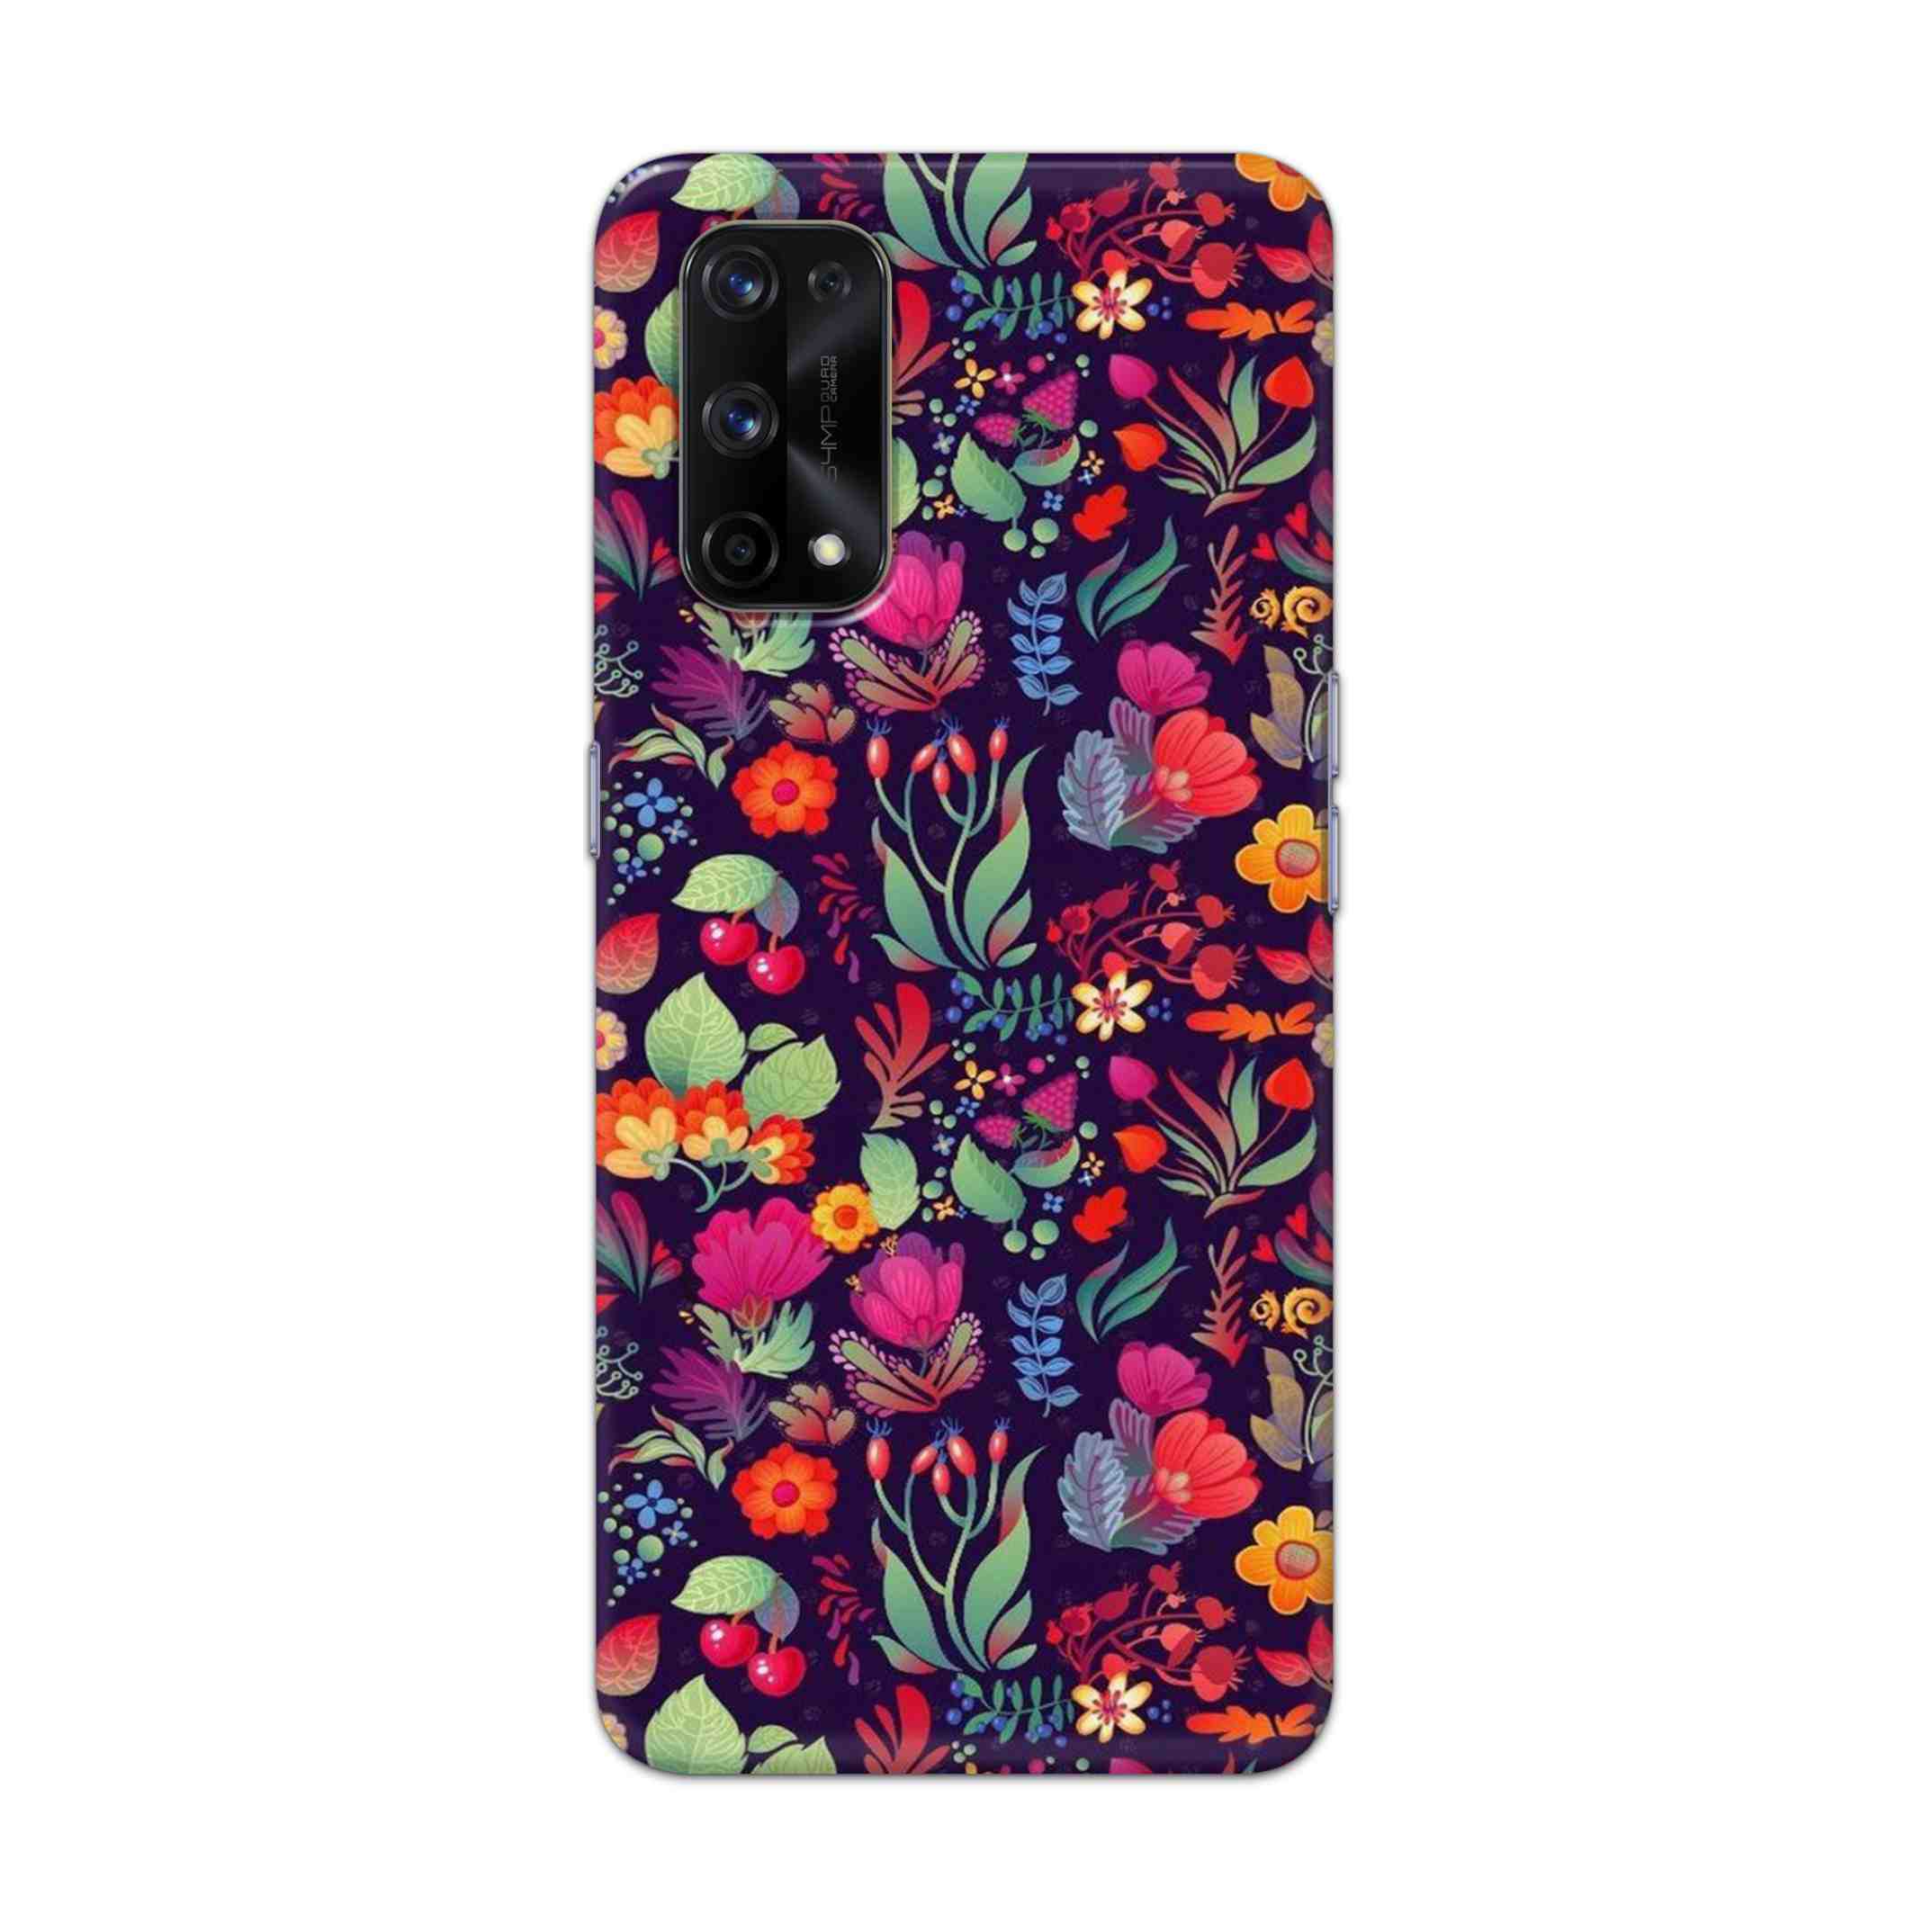 Buy Fruits Flower Hard Back Mobile Phone Case Cover For Realme X7 Pro Online